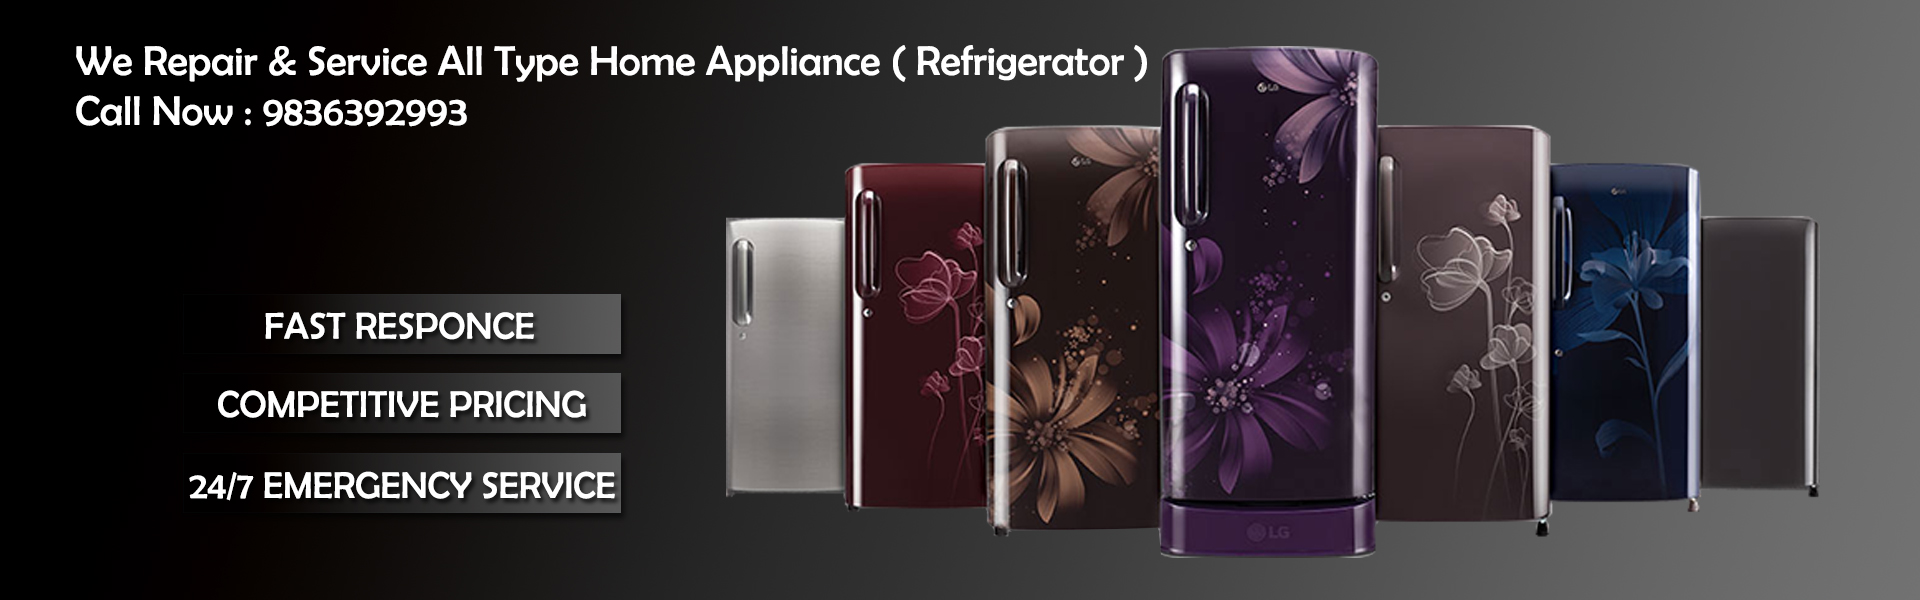 Customer Care North Refrigerator Repair & Services Banner